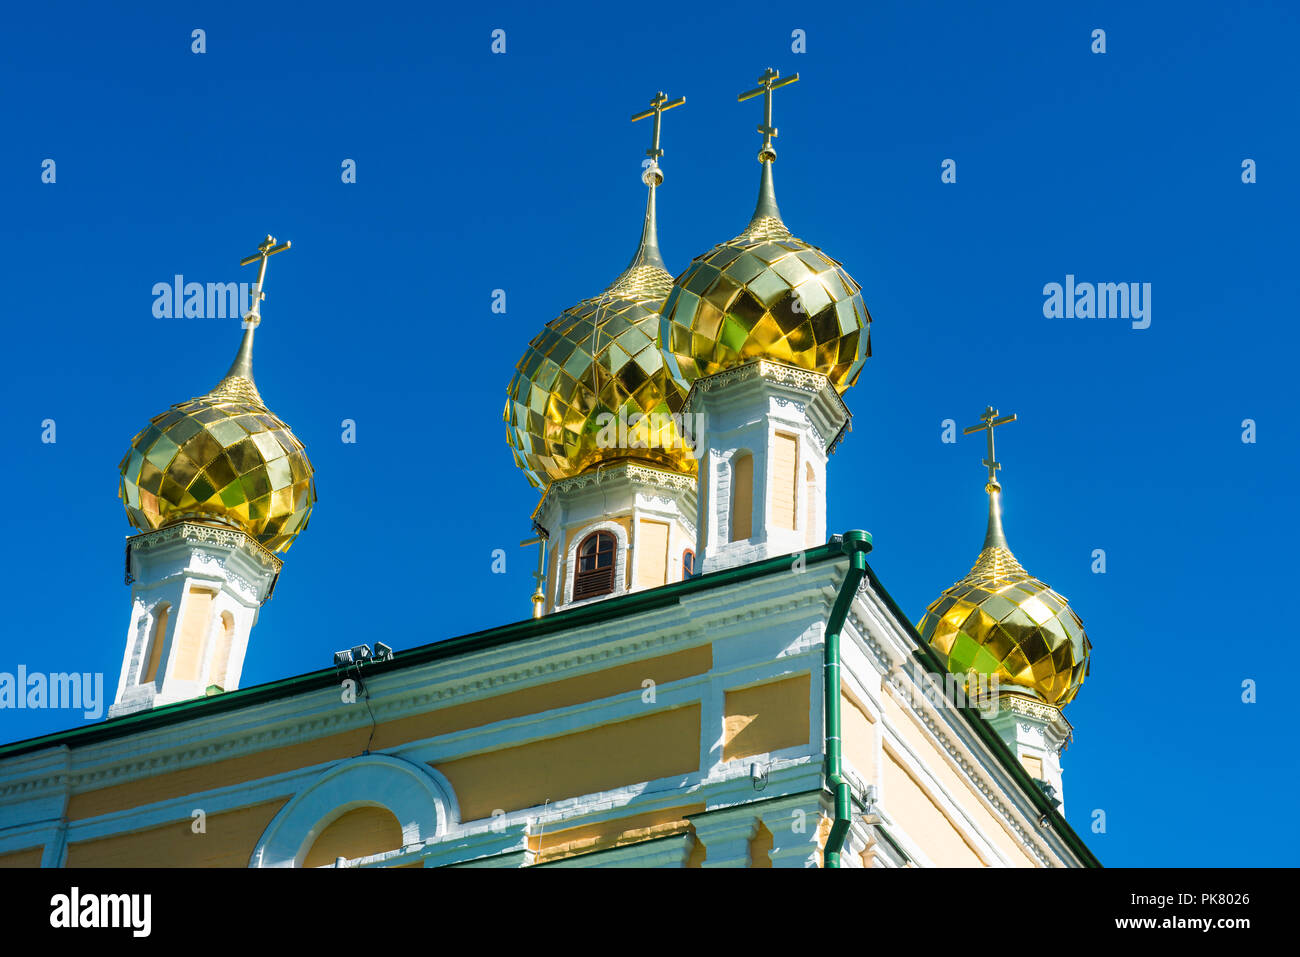 Orthodox church in Plyos on the volga river, Golden ring, Russia Stock Photo